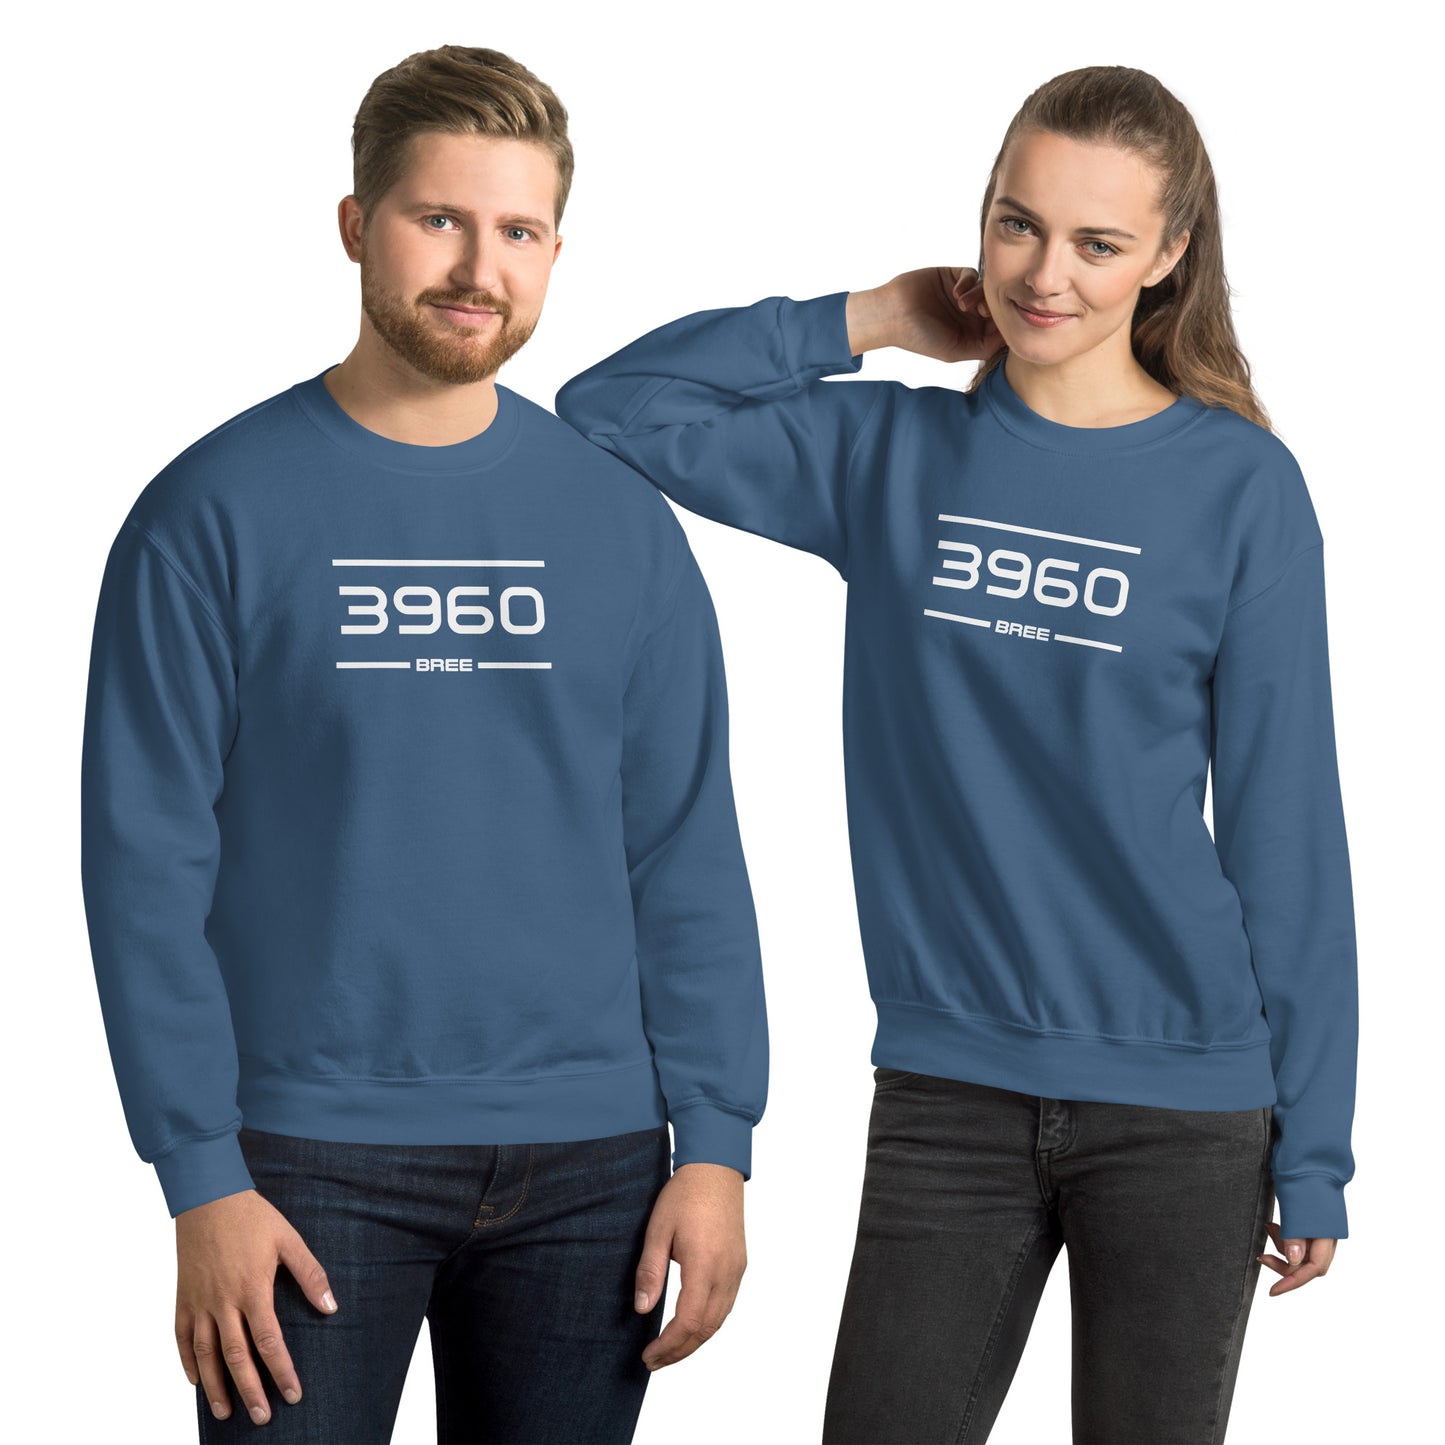 Sweater - 3960 - Bree (M/V)